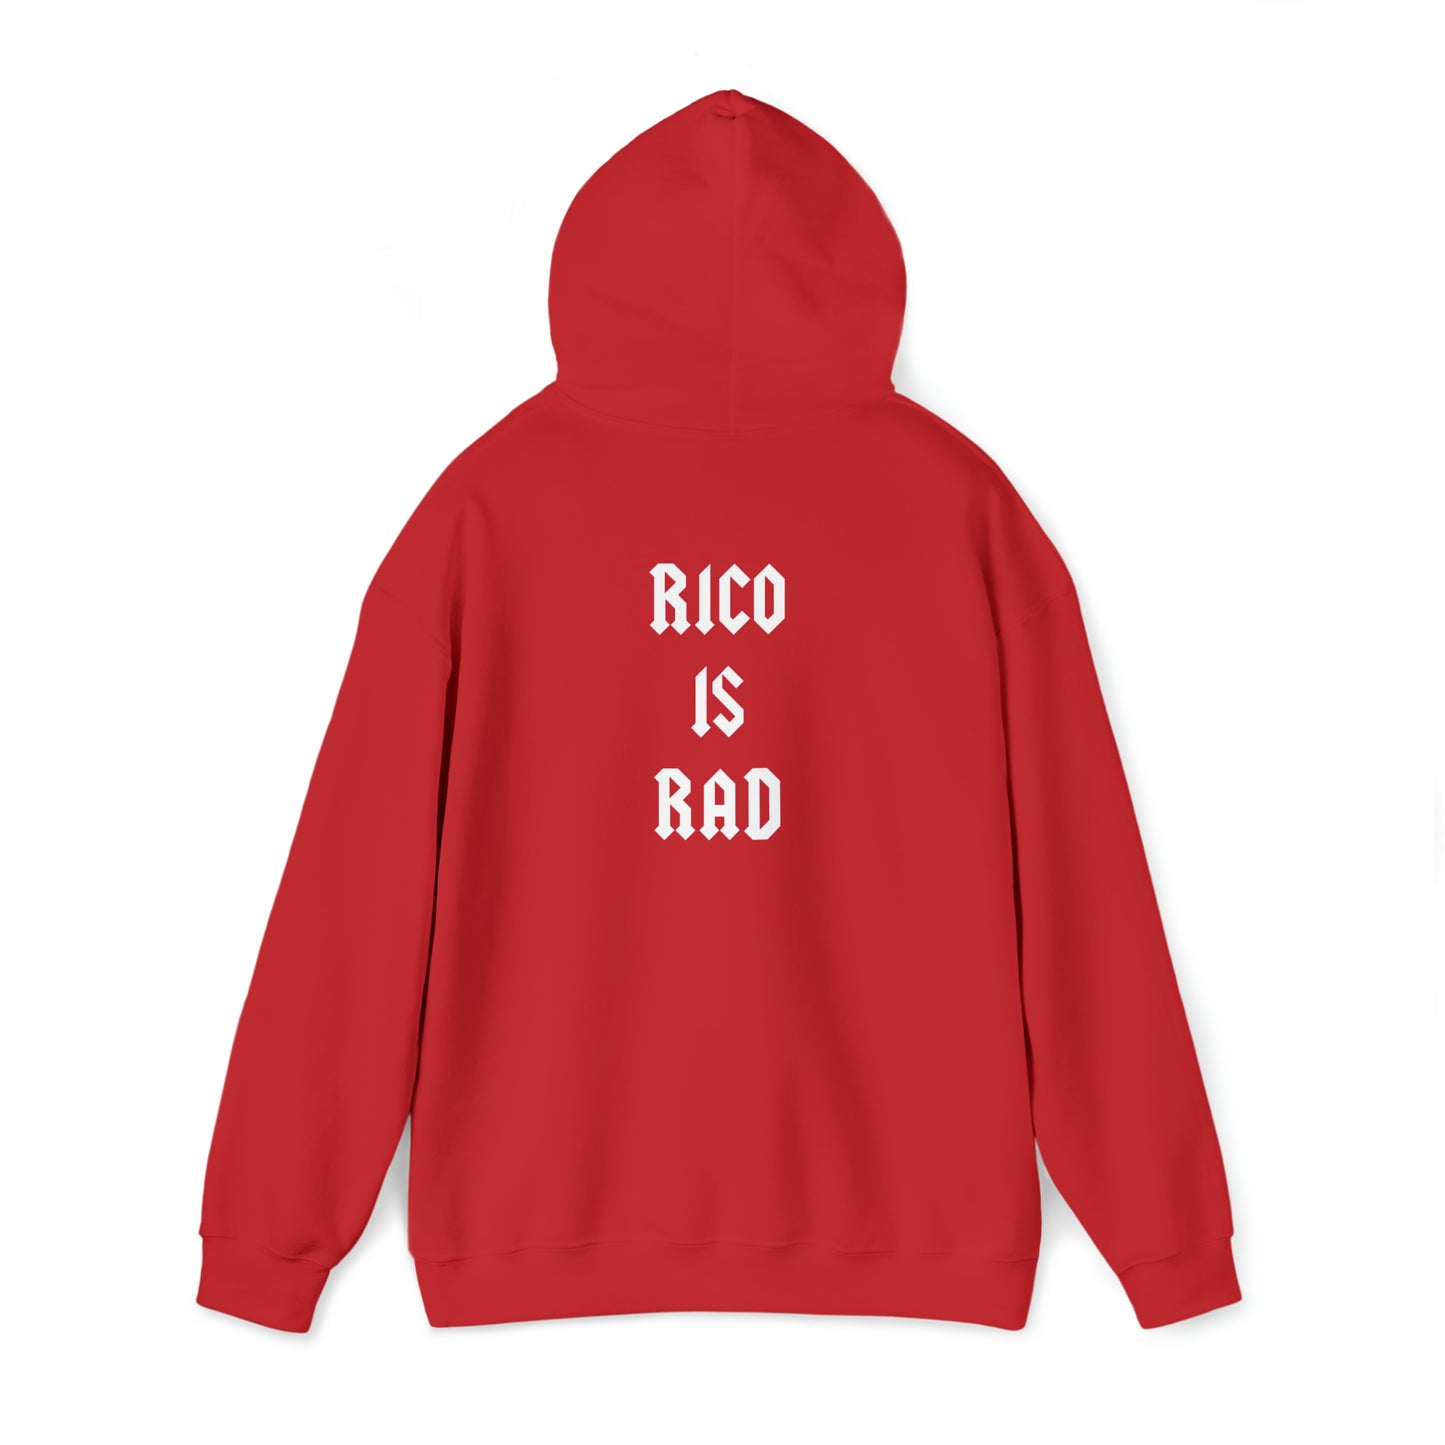 Rico is Rad Hooded Sweatshirt